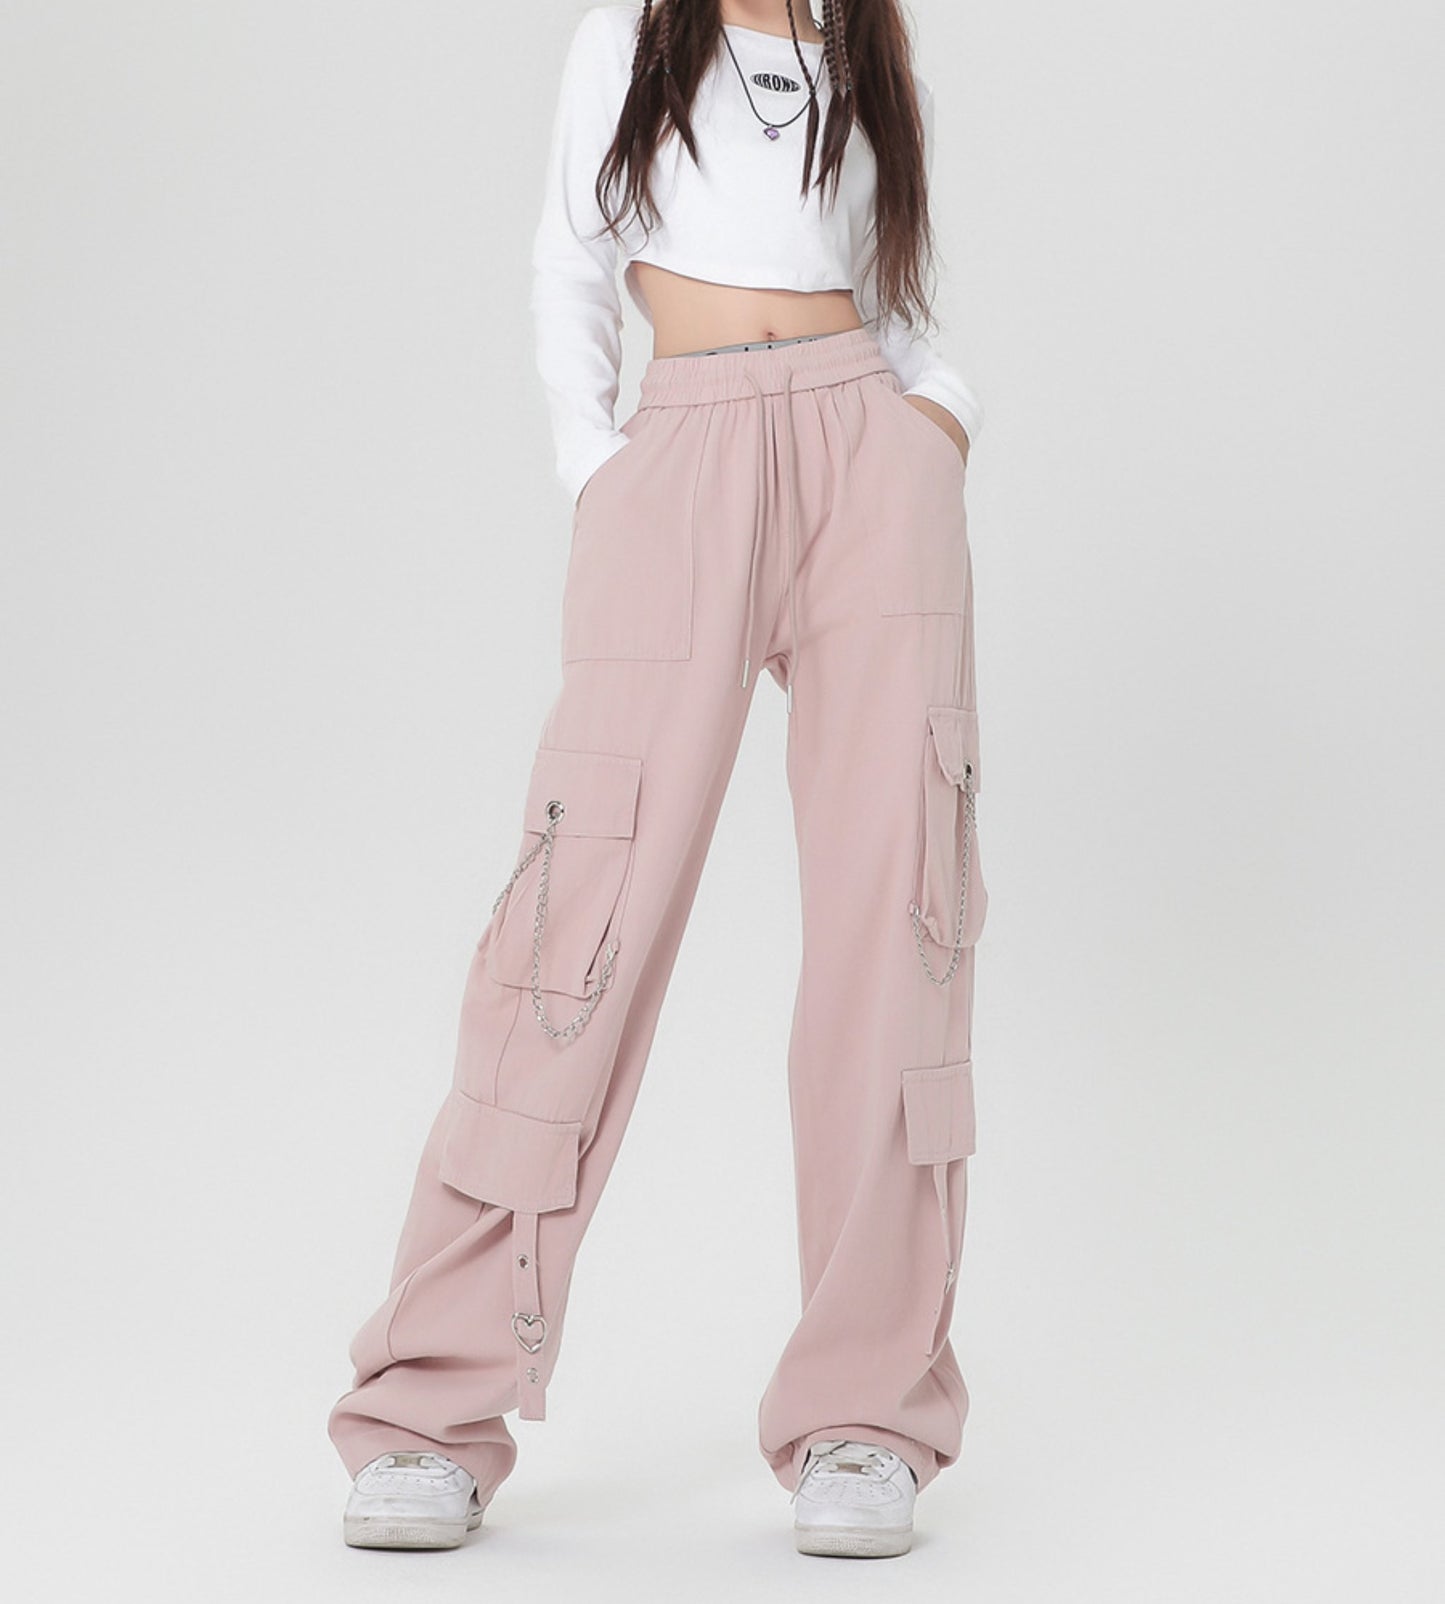 Unisex 3 Colors Pink Wide-leg Trousers Pant,Baggy Streetwear HipHop Pants